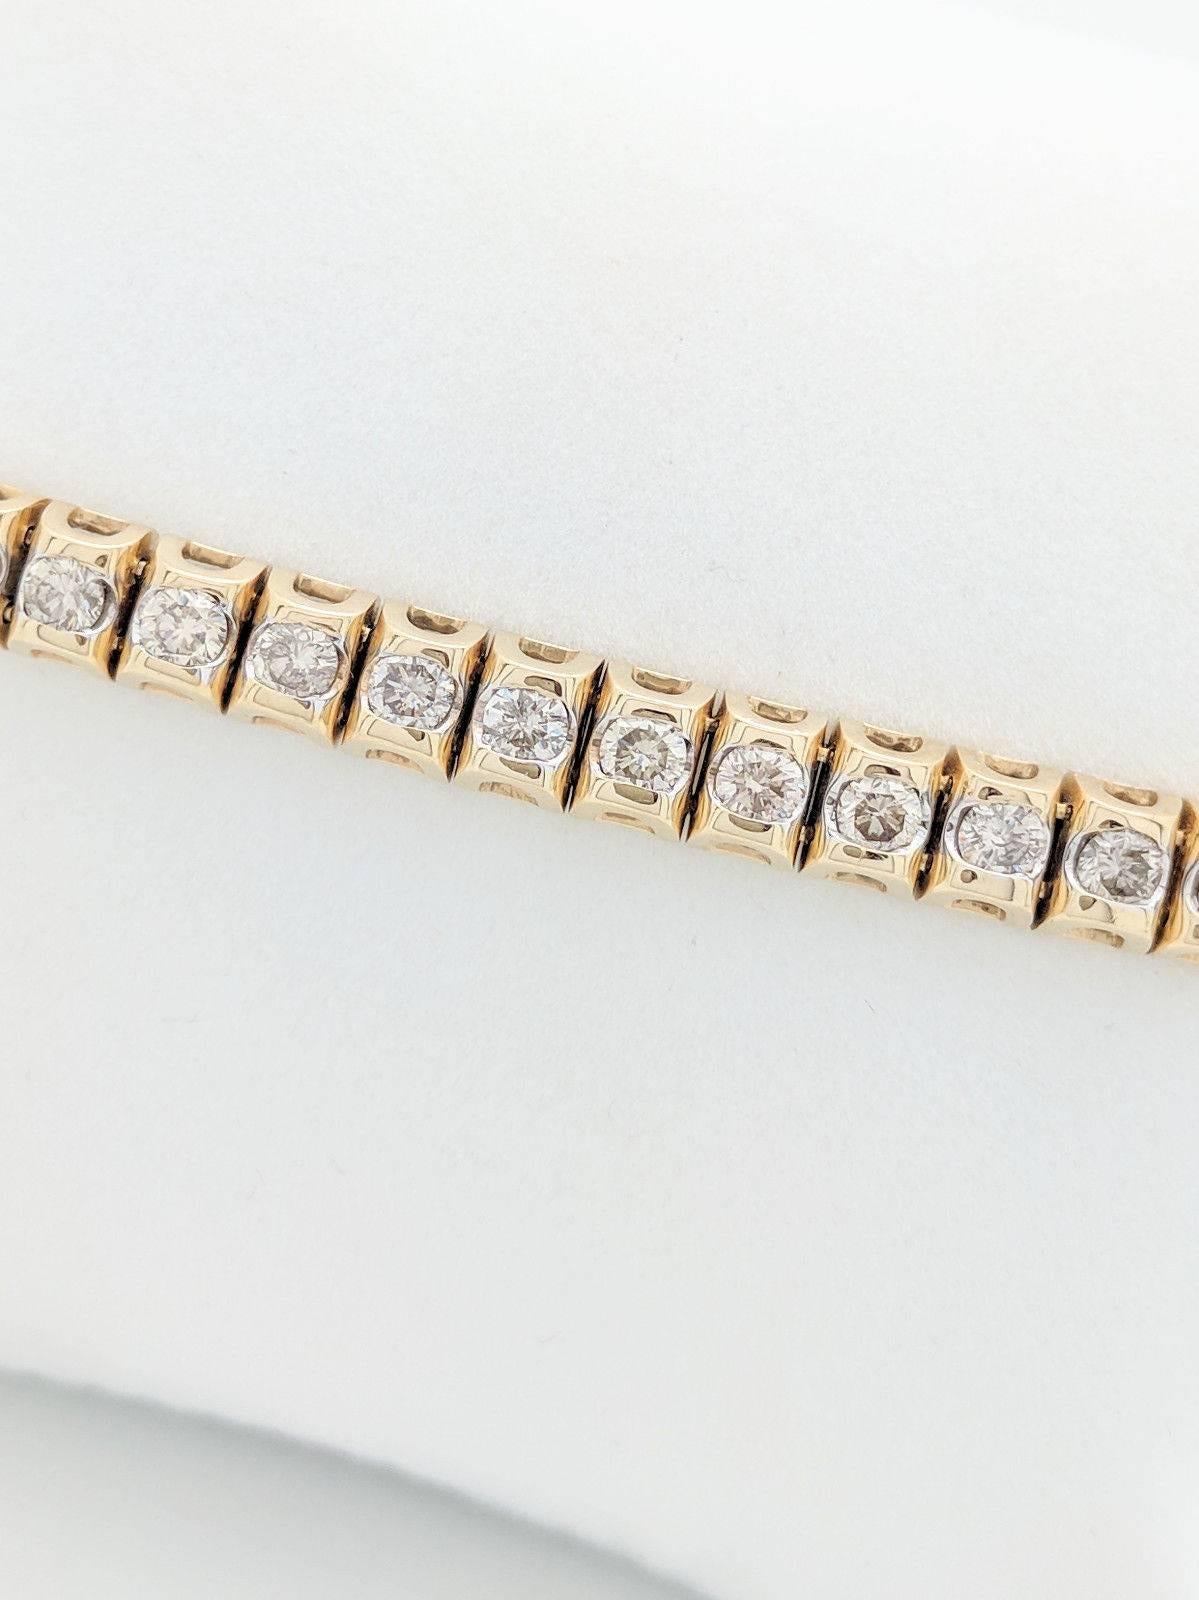 5 carat diamond tennis bracelet 14k yellow gold